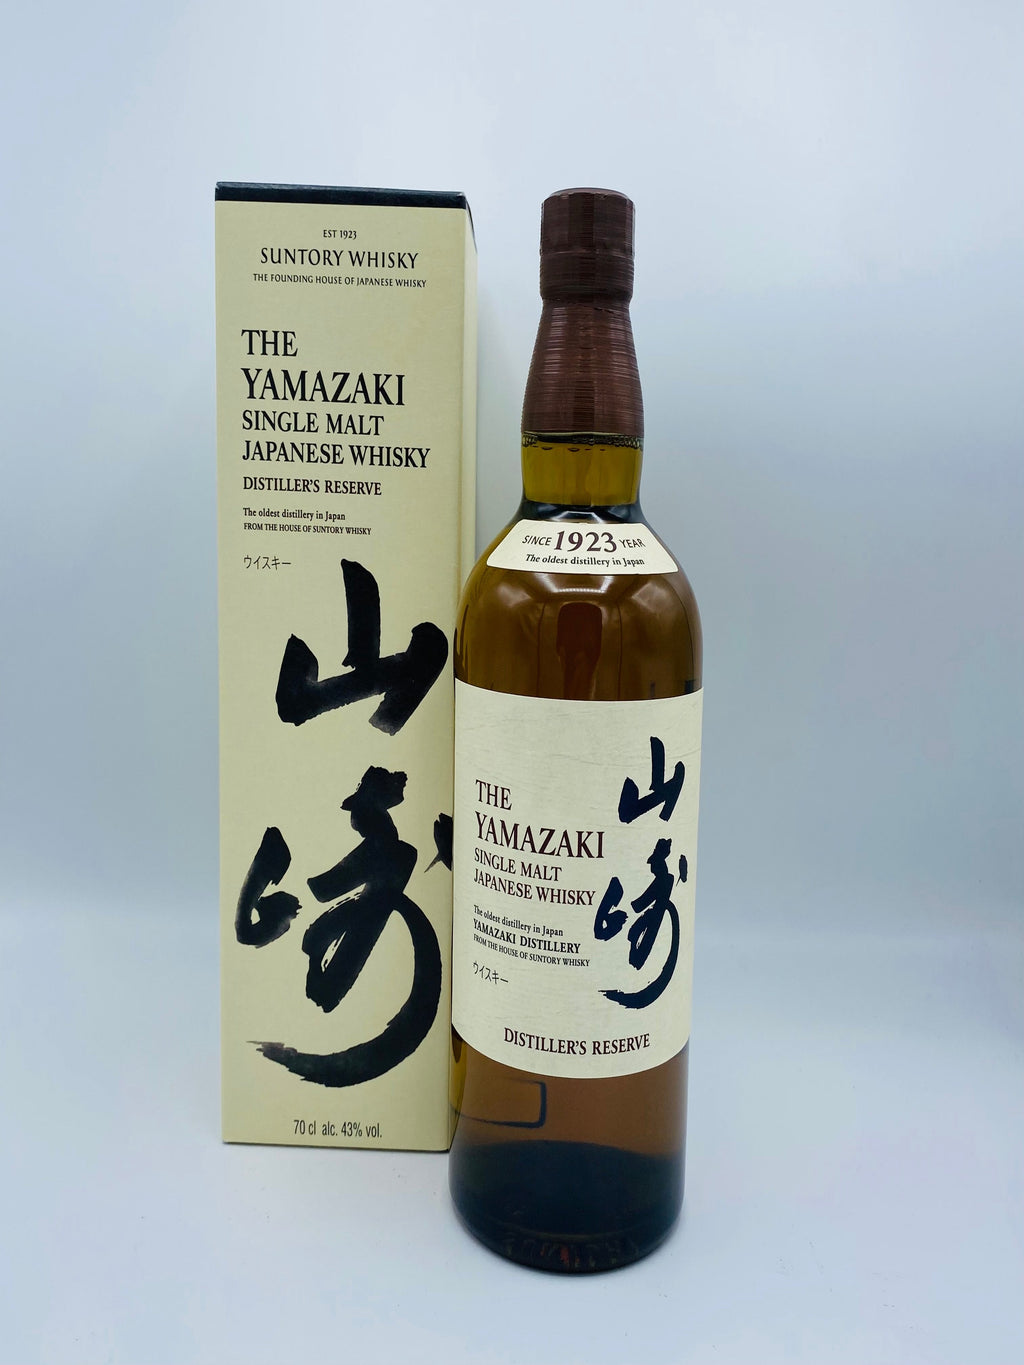 The Yamazaki "Distiller's Reserve" - Suntory - Single Malt Japanese Whisky